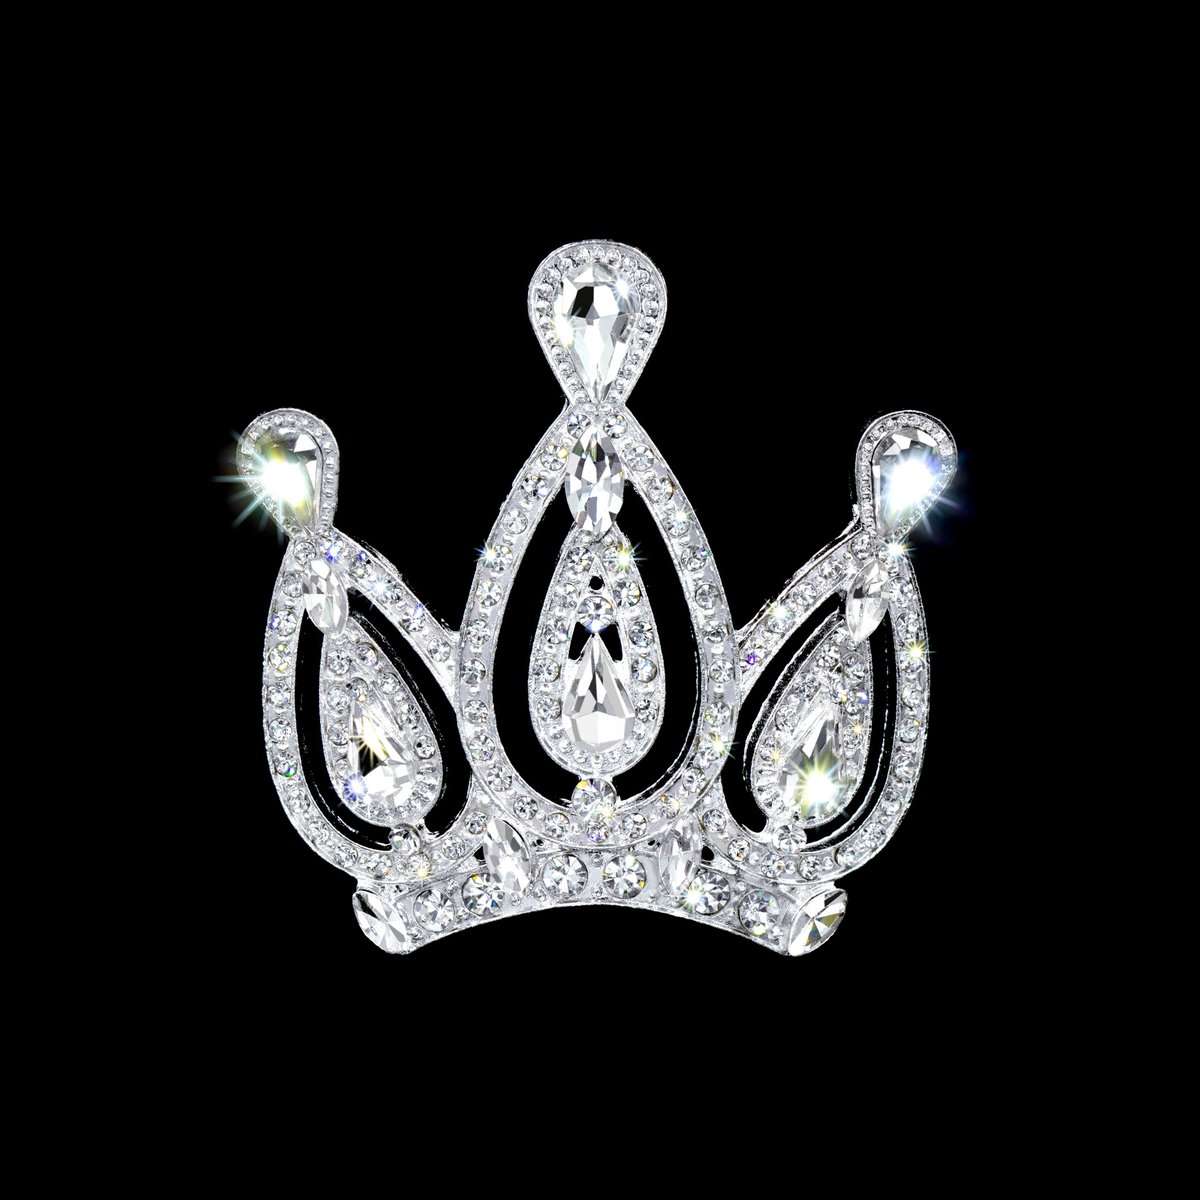 #17398 - Royal Statement Crown Pin 
rhinestonejewelry.com/products/17398… 
#Pageant #CrownPin #rhinestonejewelry